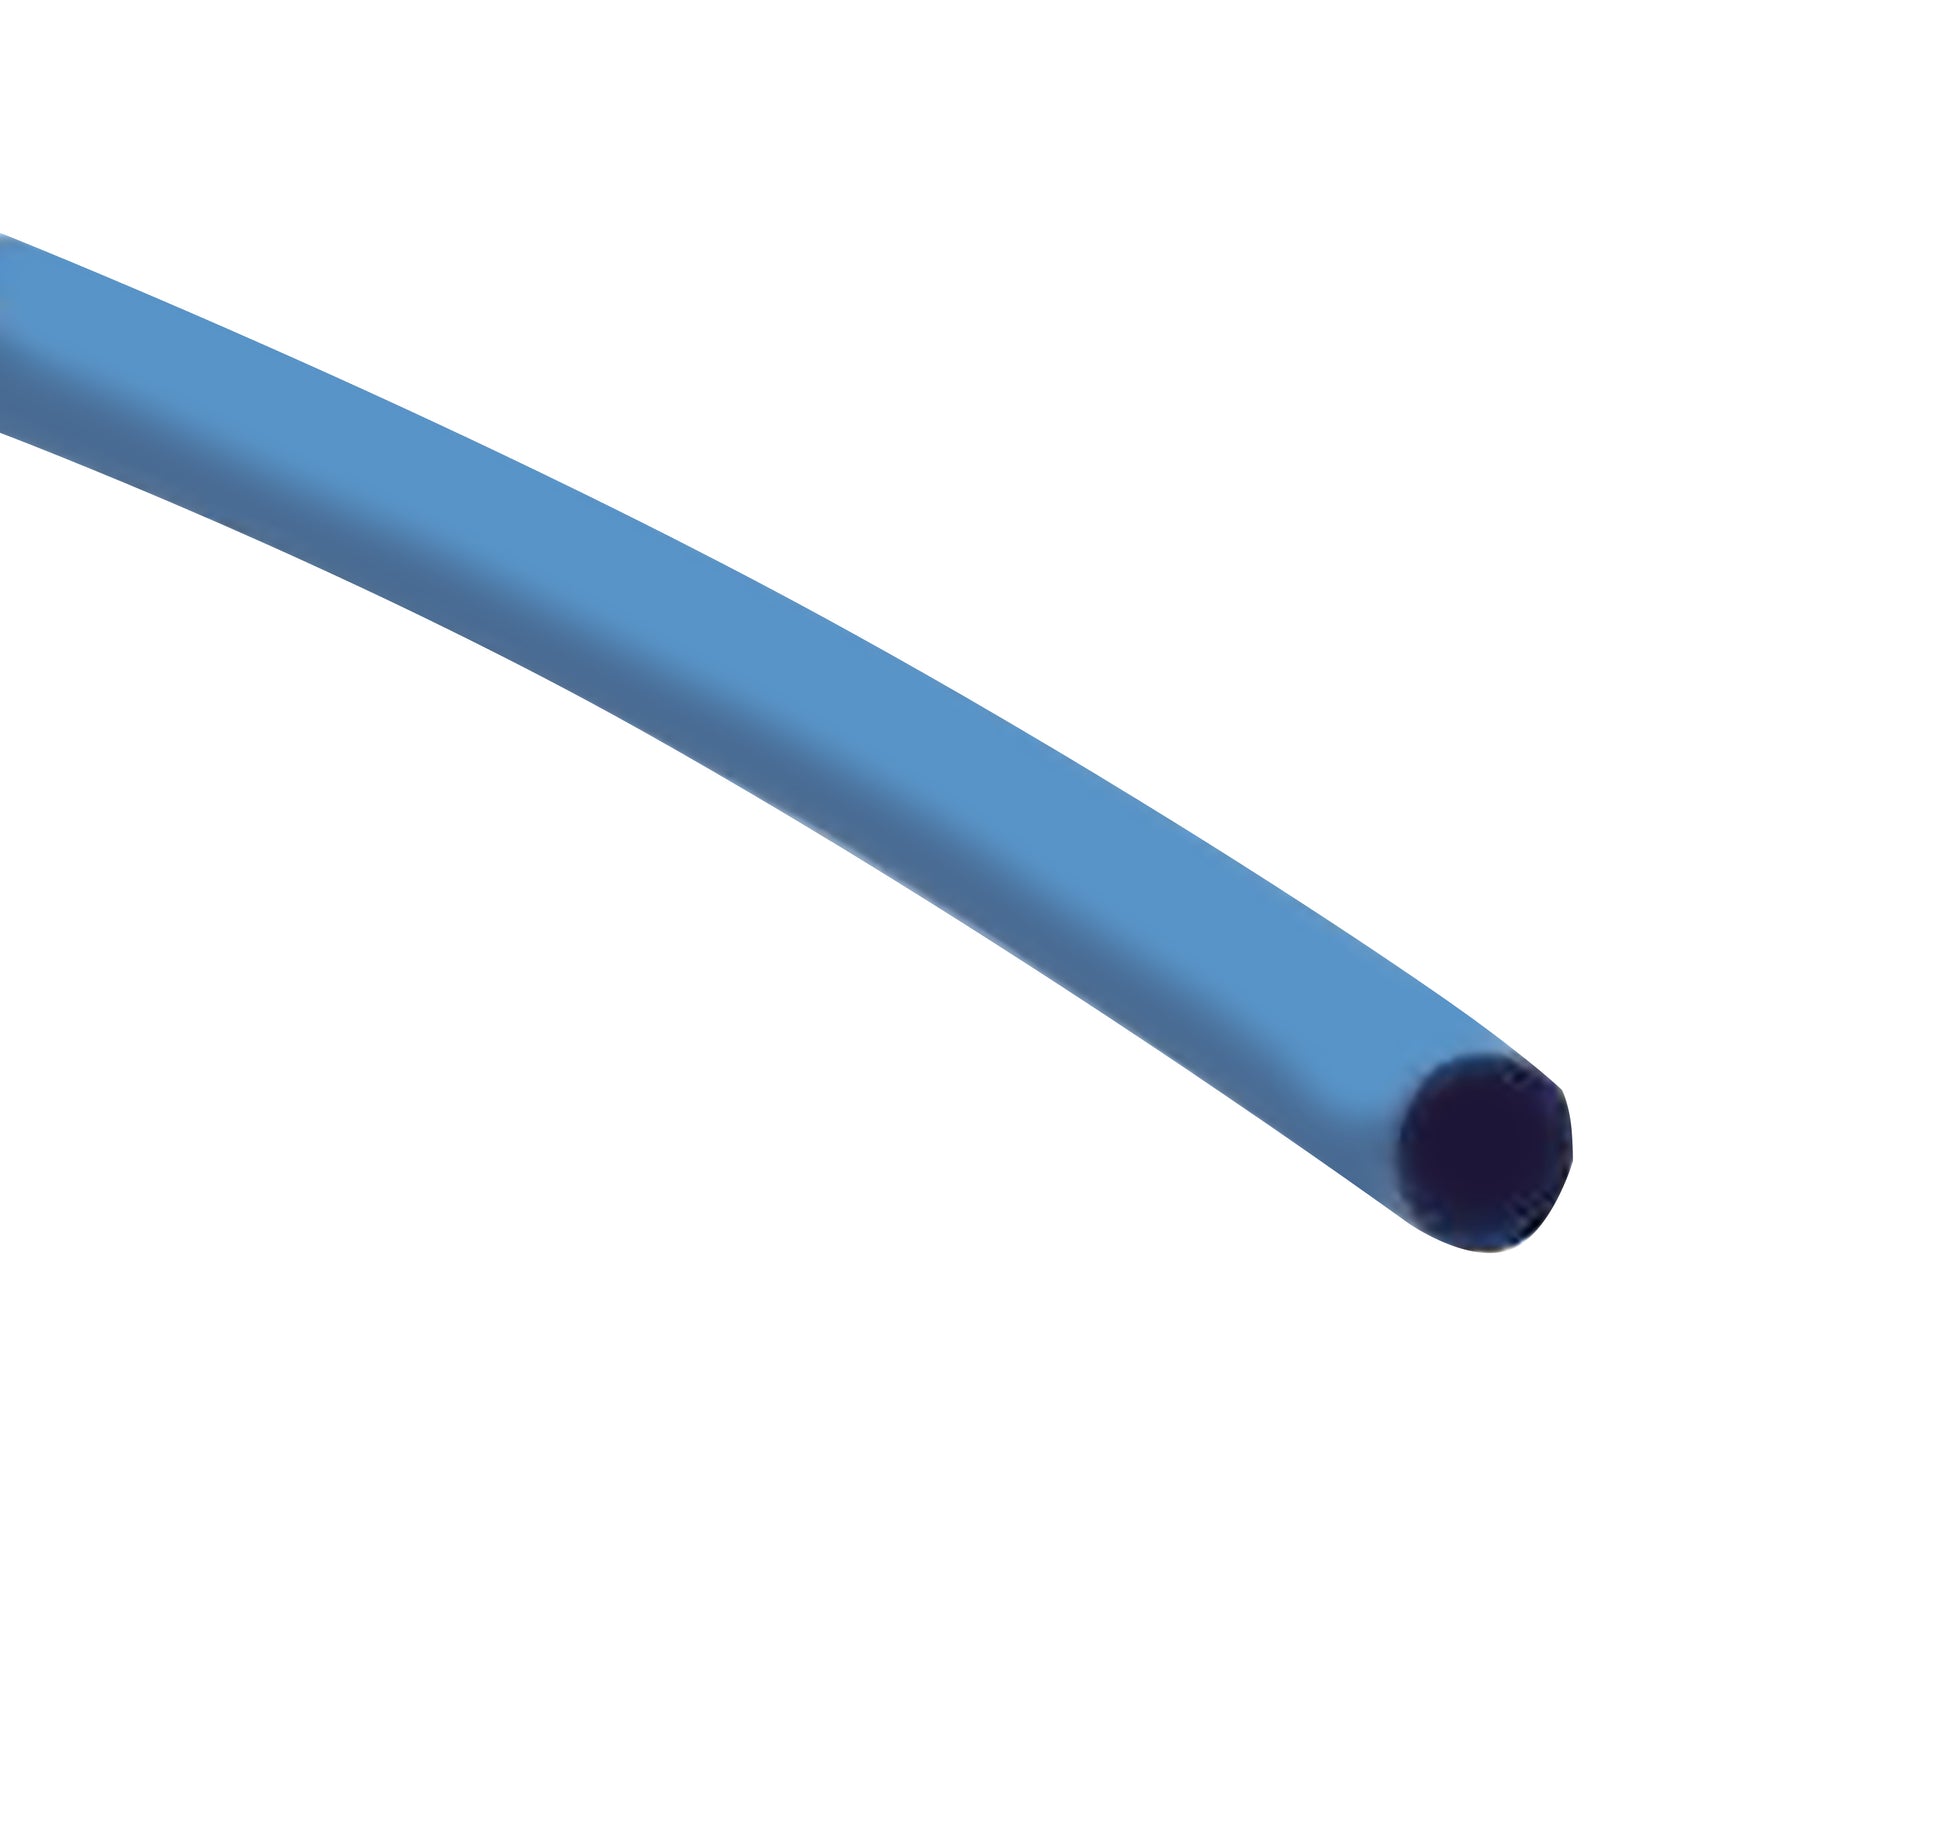 Flexible Thin Single Wall Non-Adhesive Heat Shrink Tubing 2:1 Blue 1/2" ID - 100' Ft Spool